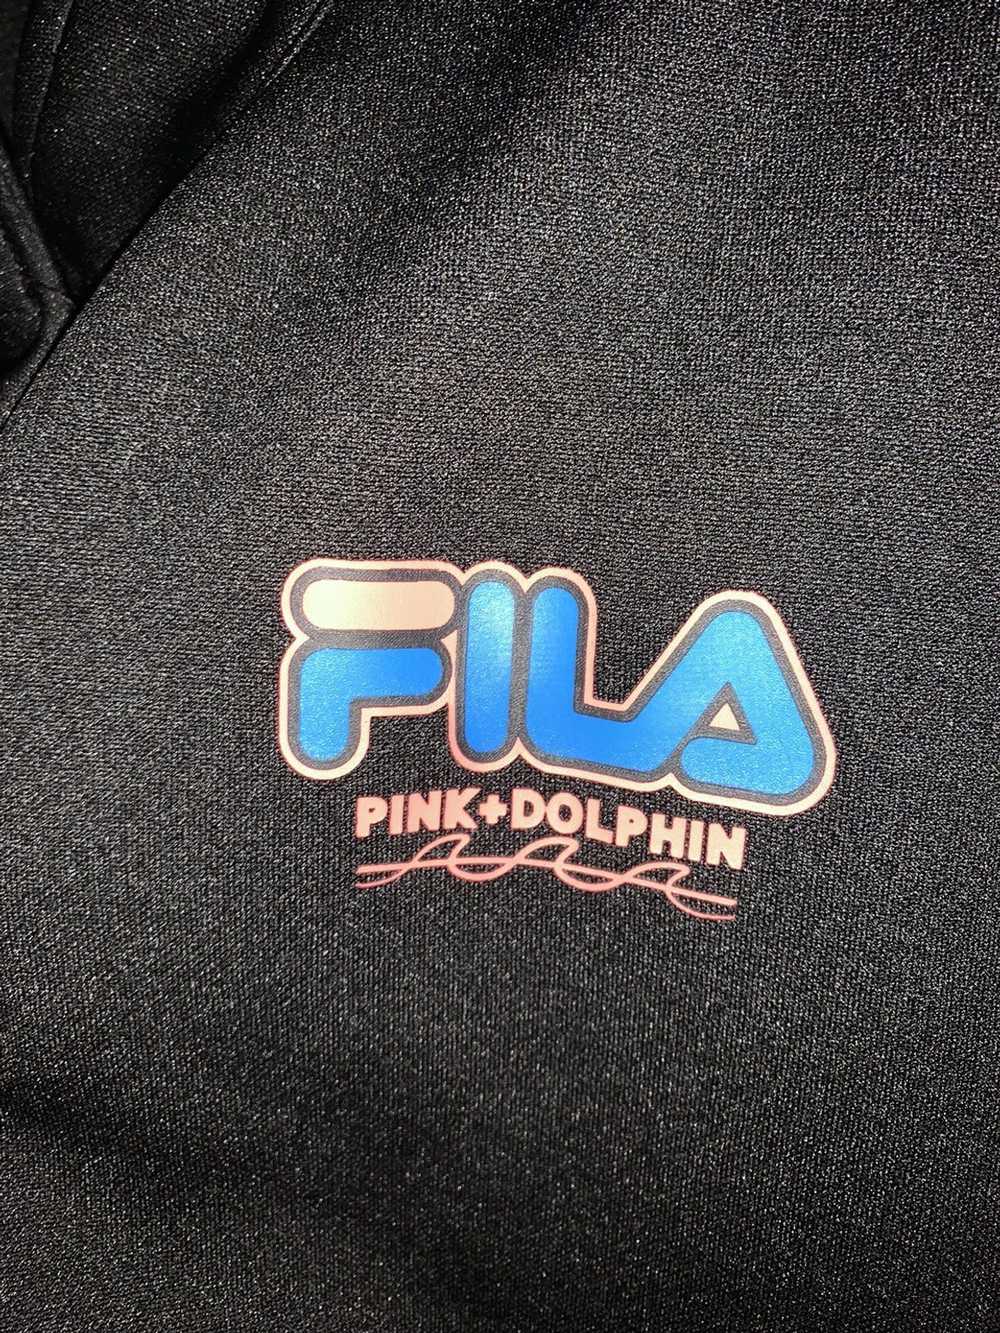 Fila × Pink Dolphin Fila x Pink Dolphin Collab Ja… - image 2